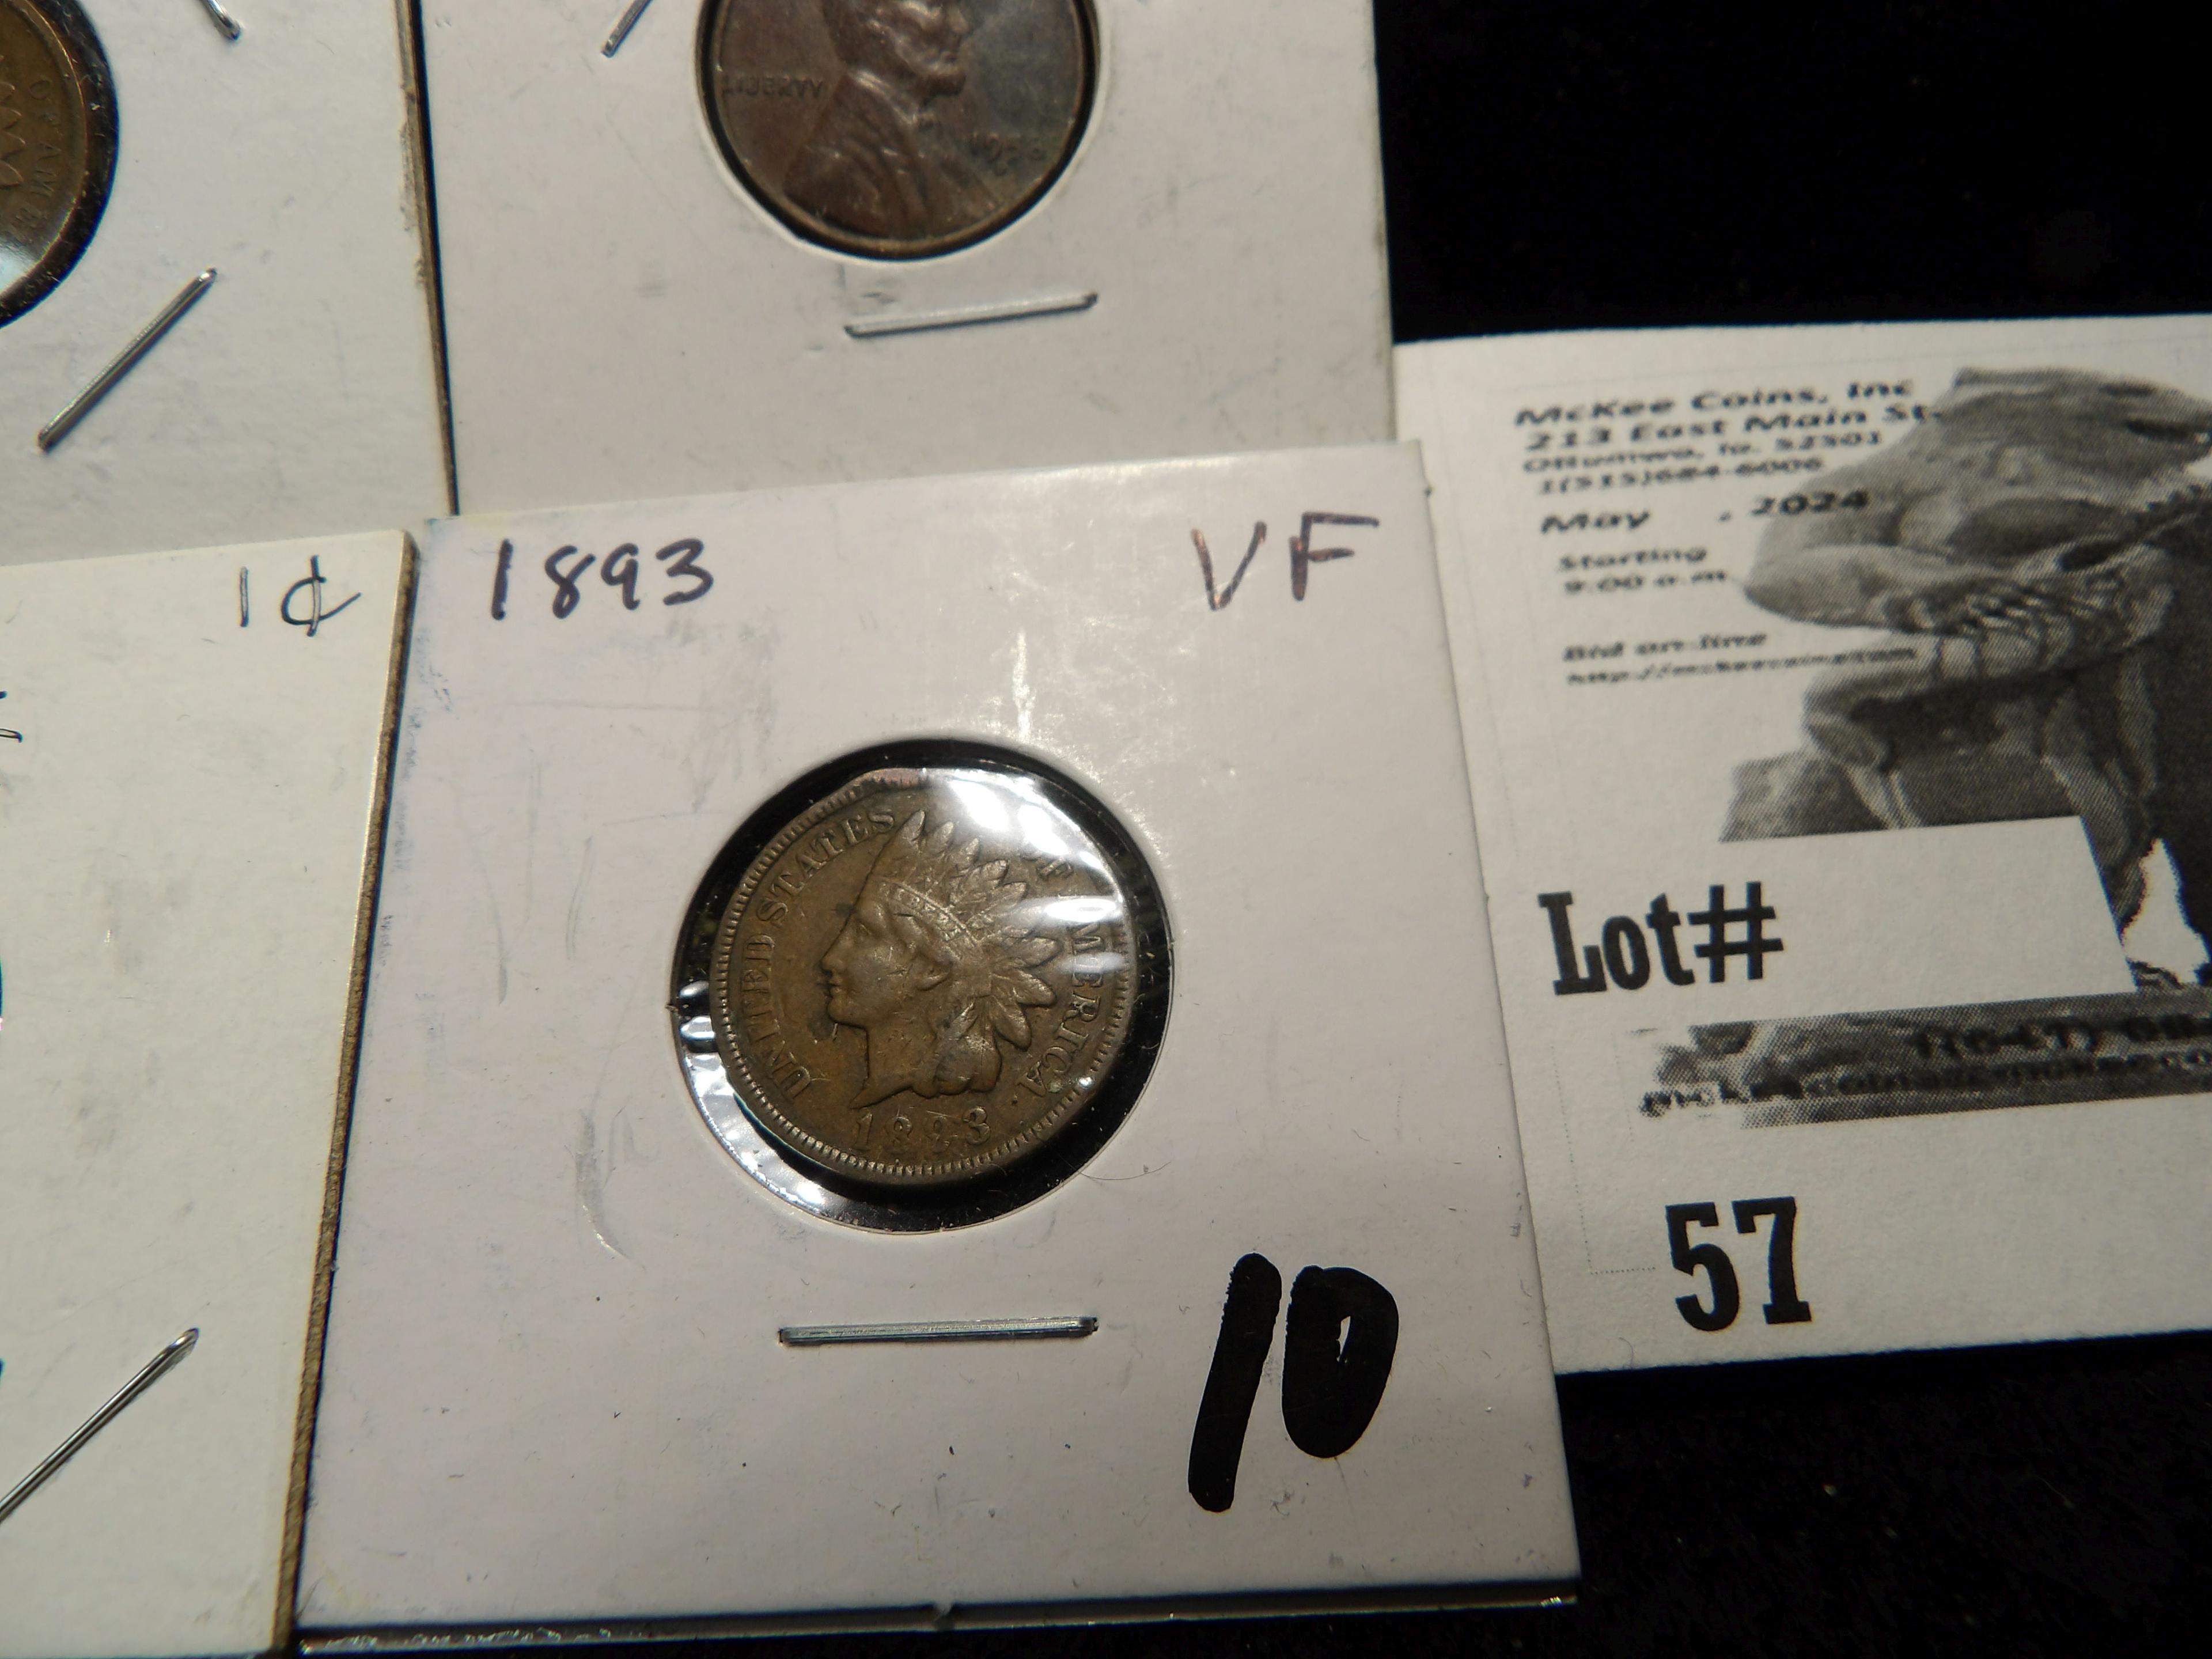 1893 VF & 1901 Good Indian Head Cents, 1925 S Mint Error Cent, & 1958 D Cent.